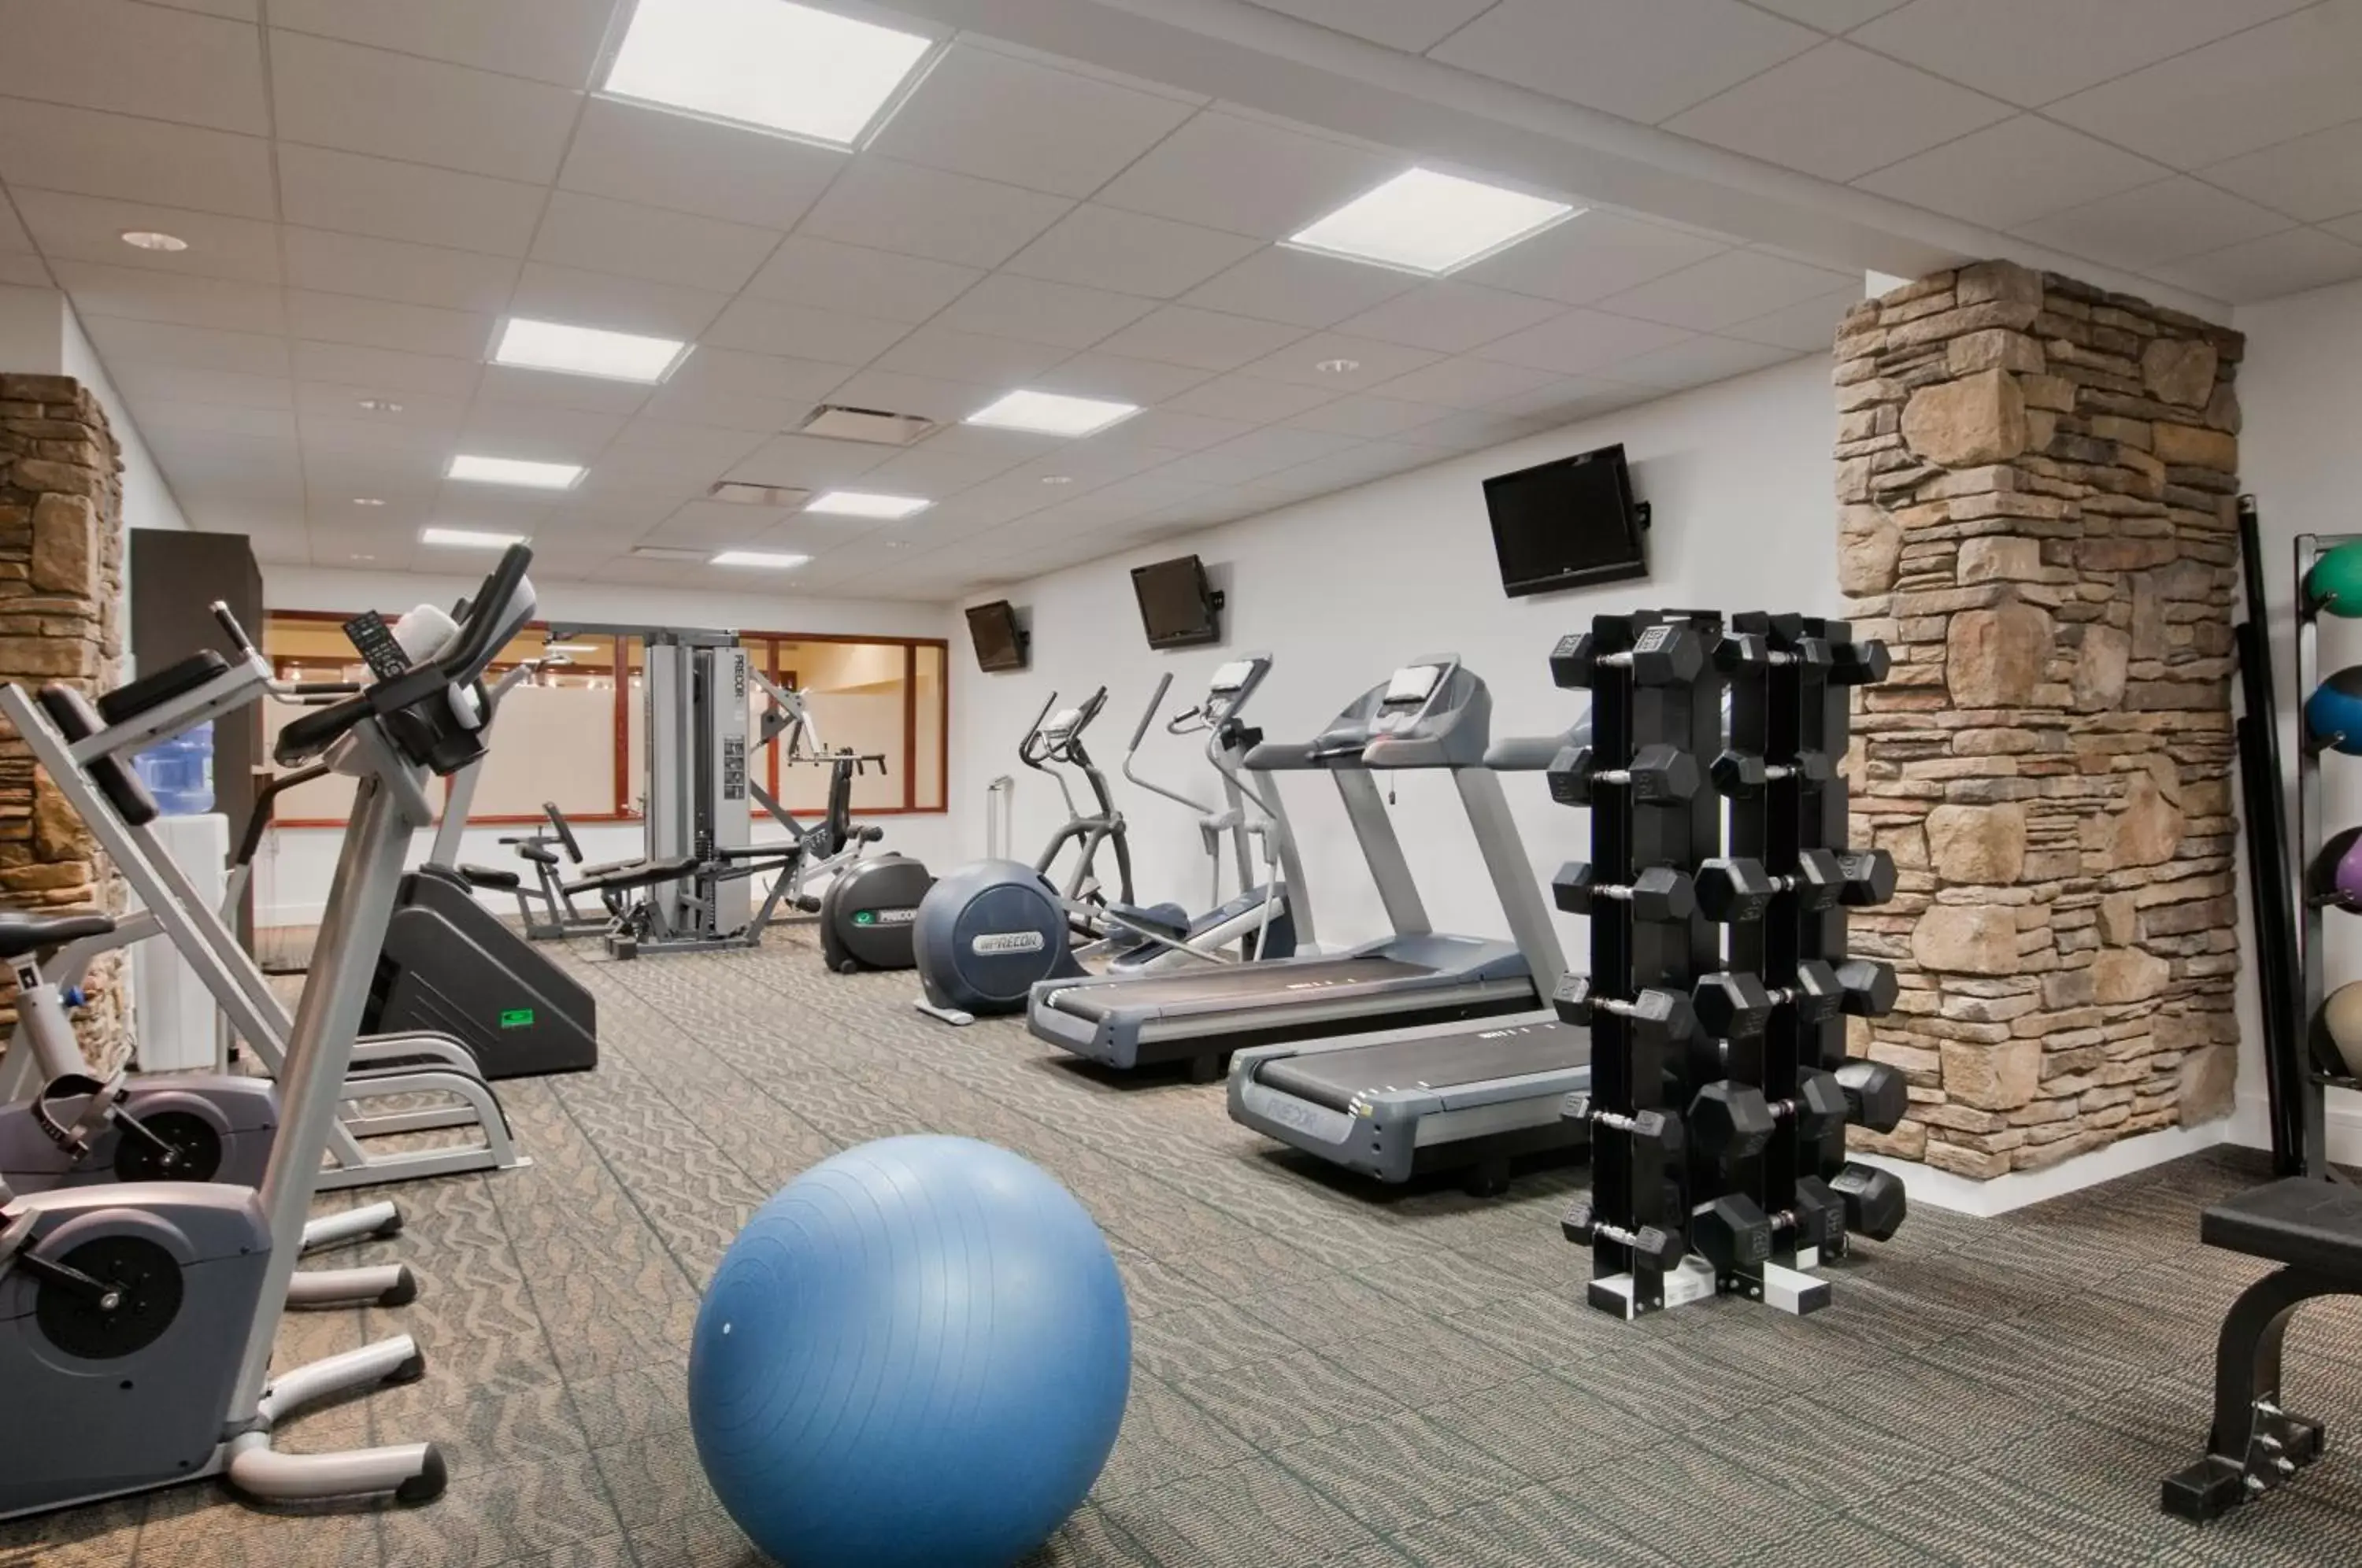 Fitness centre/facilities, Fitness Center/Facilities in Fairmont Jasper Park Lodge